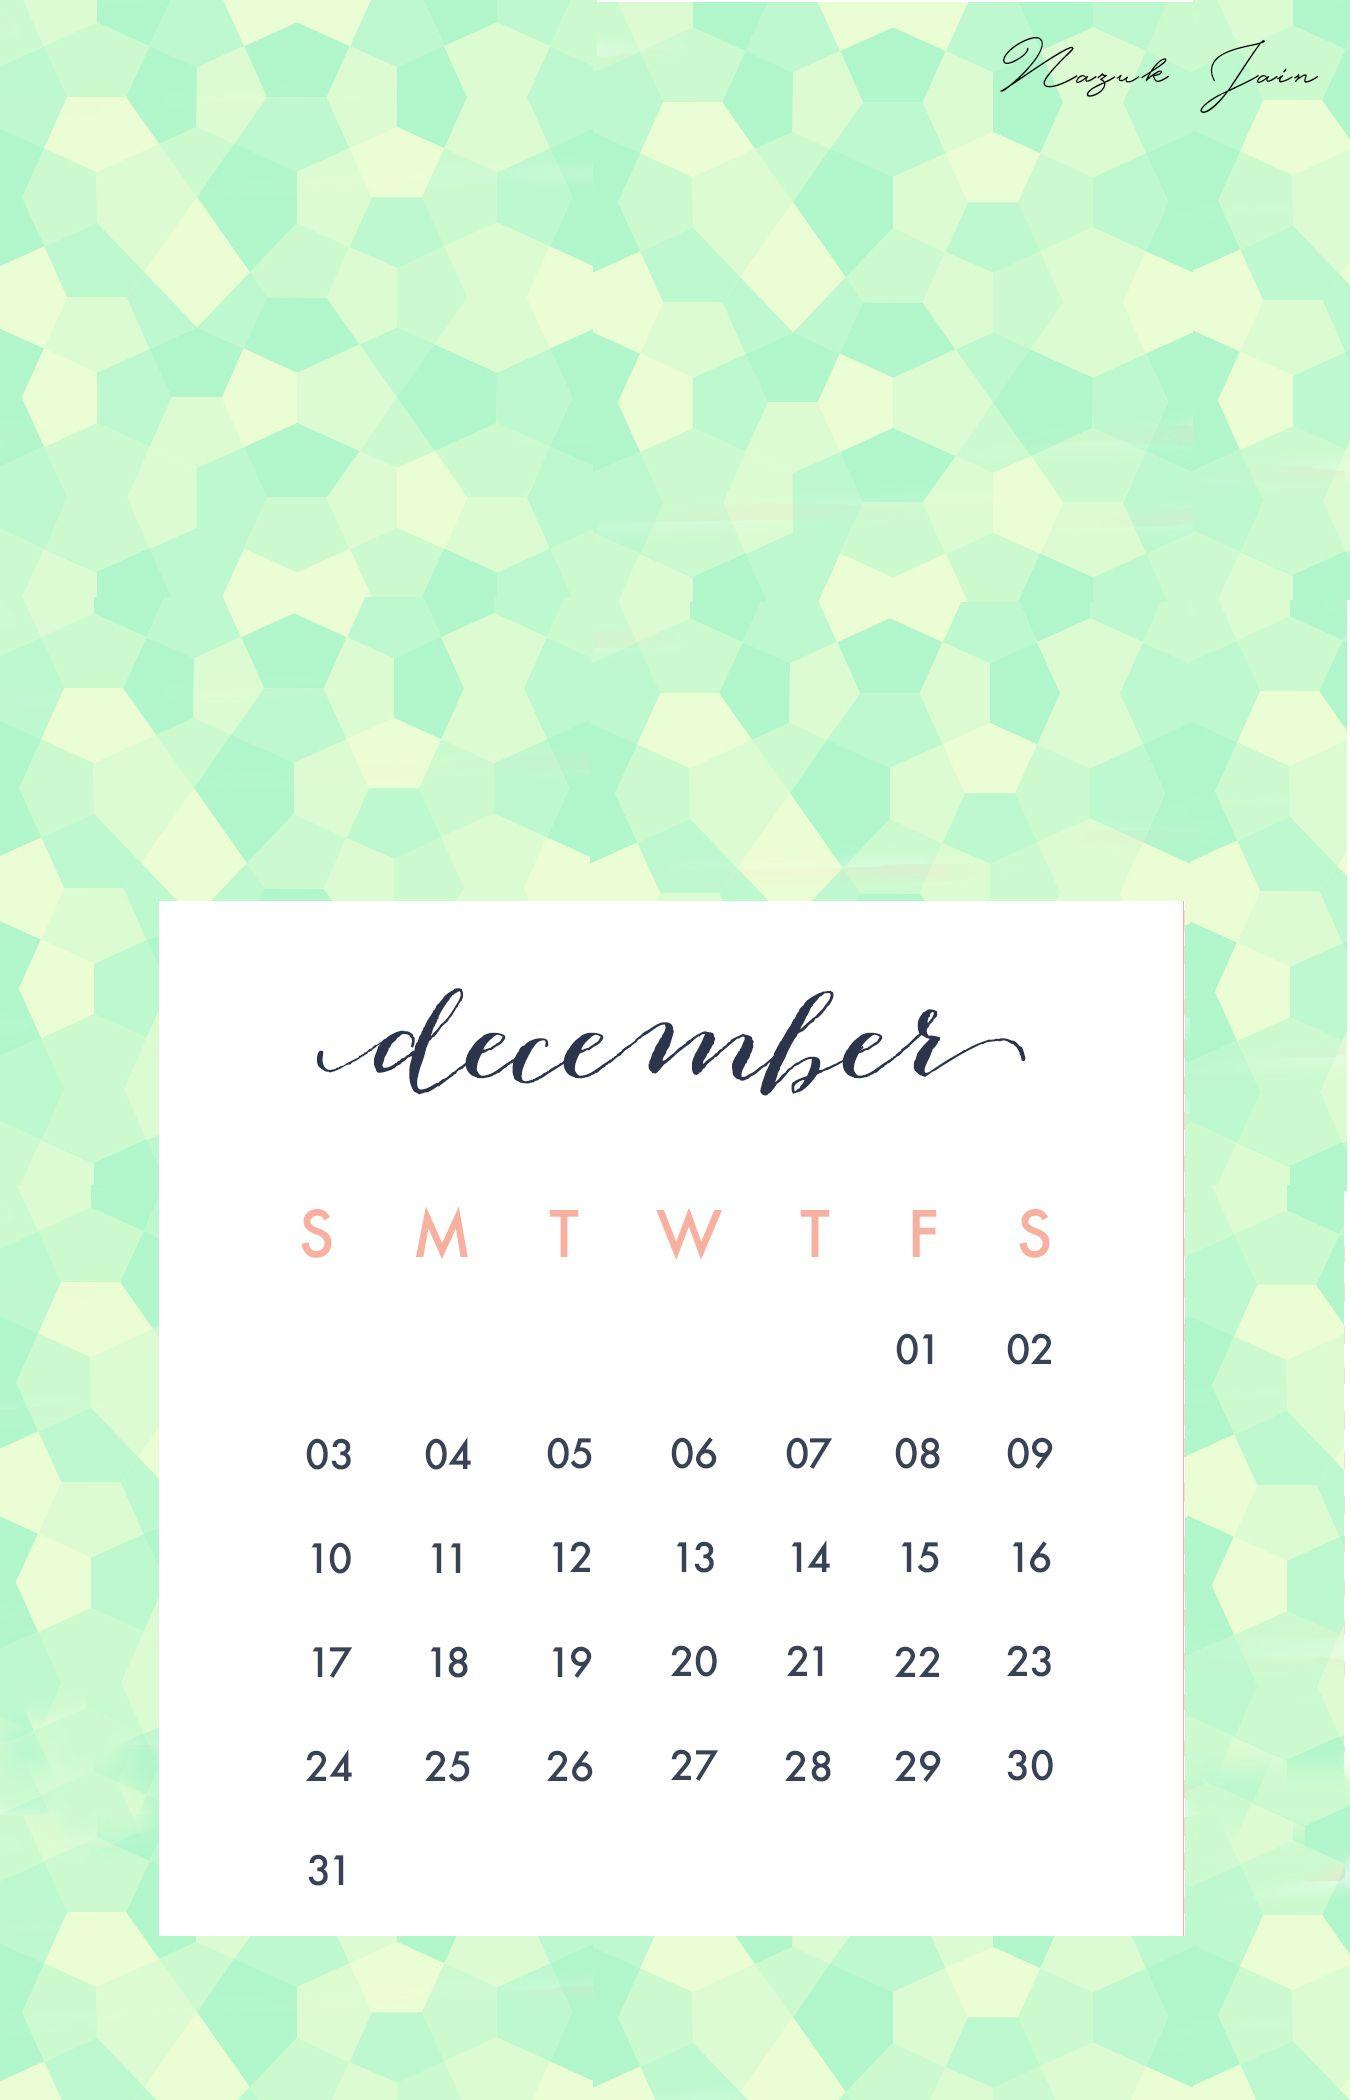 December Calendar Printables 2017 by Nazuk Jain. Calendar